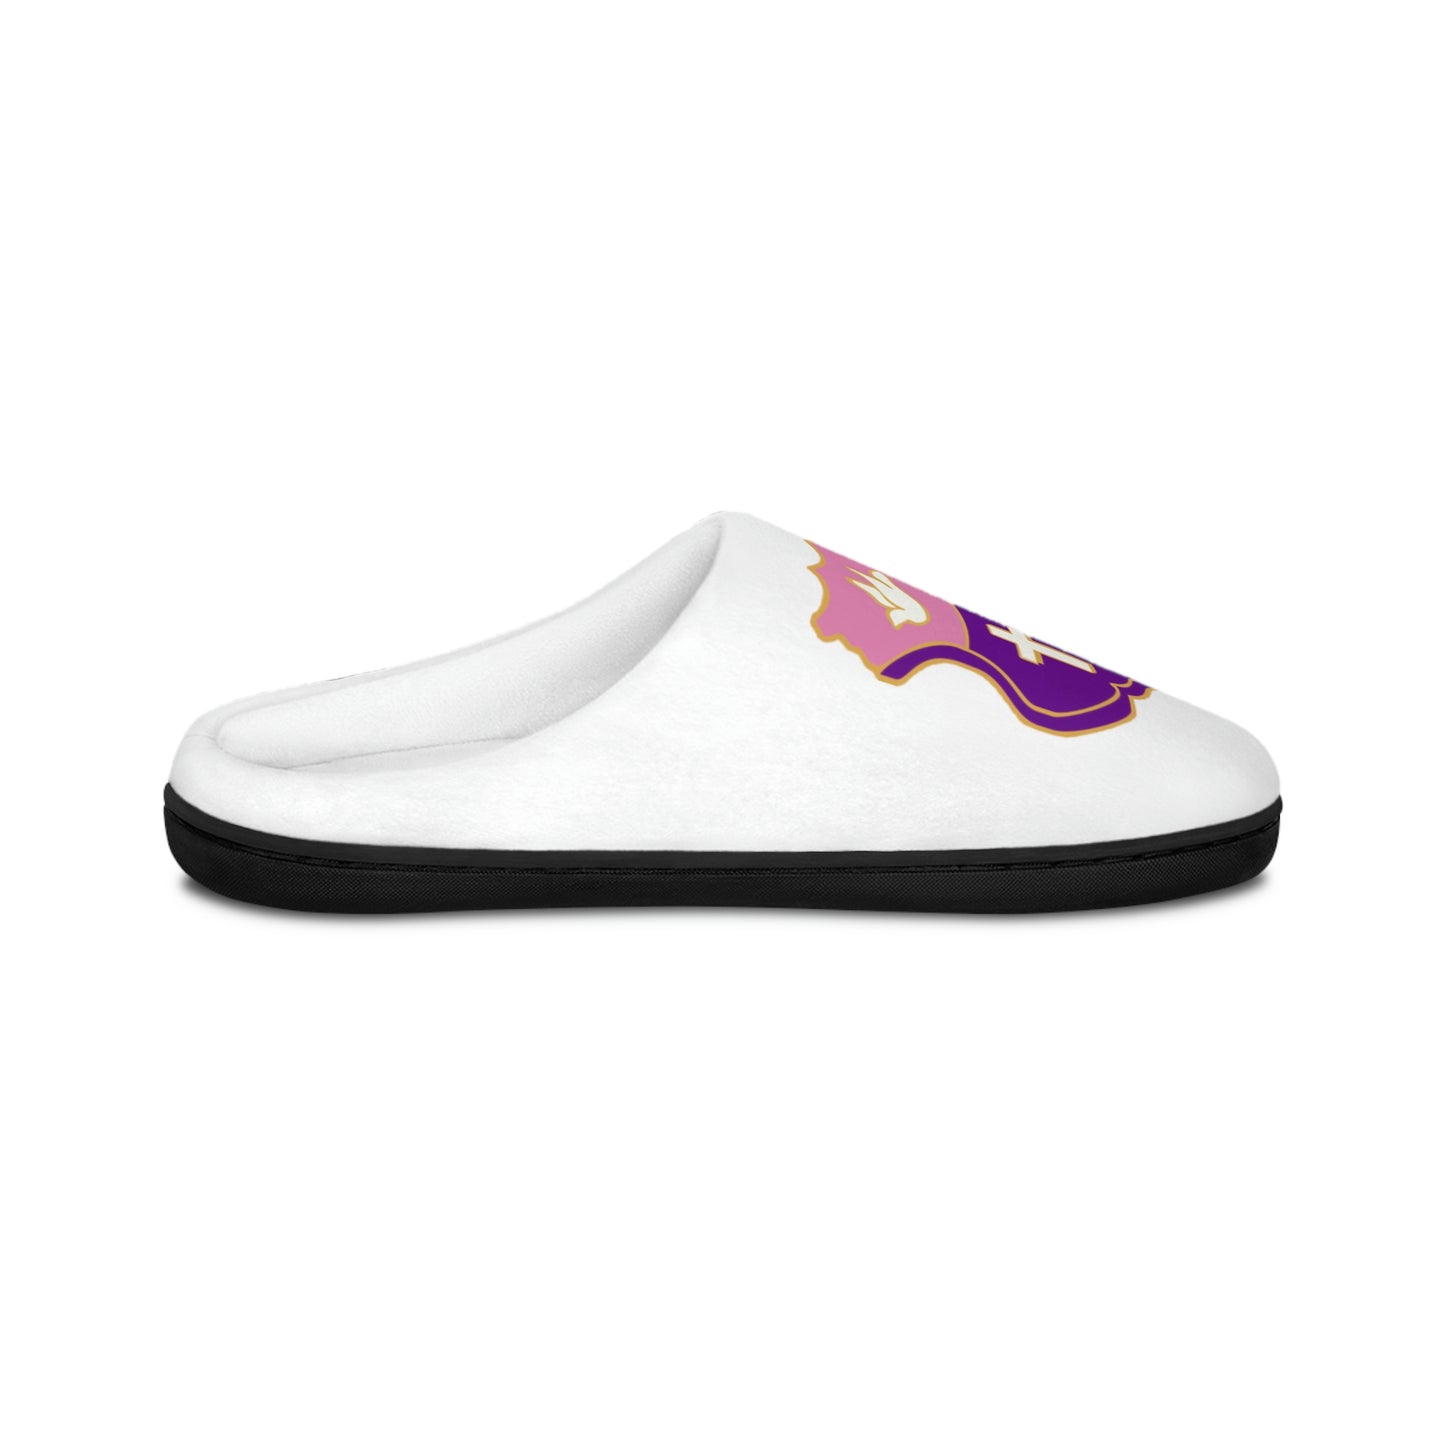 Kappa Epsilon Psi Women's Indoor Slippers ~ White